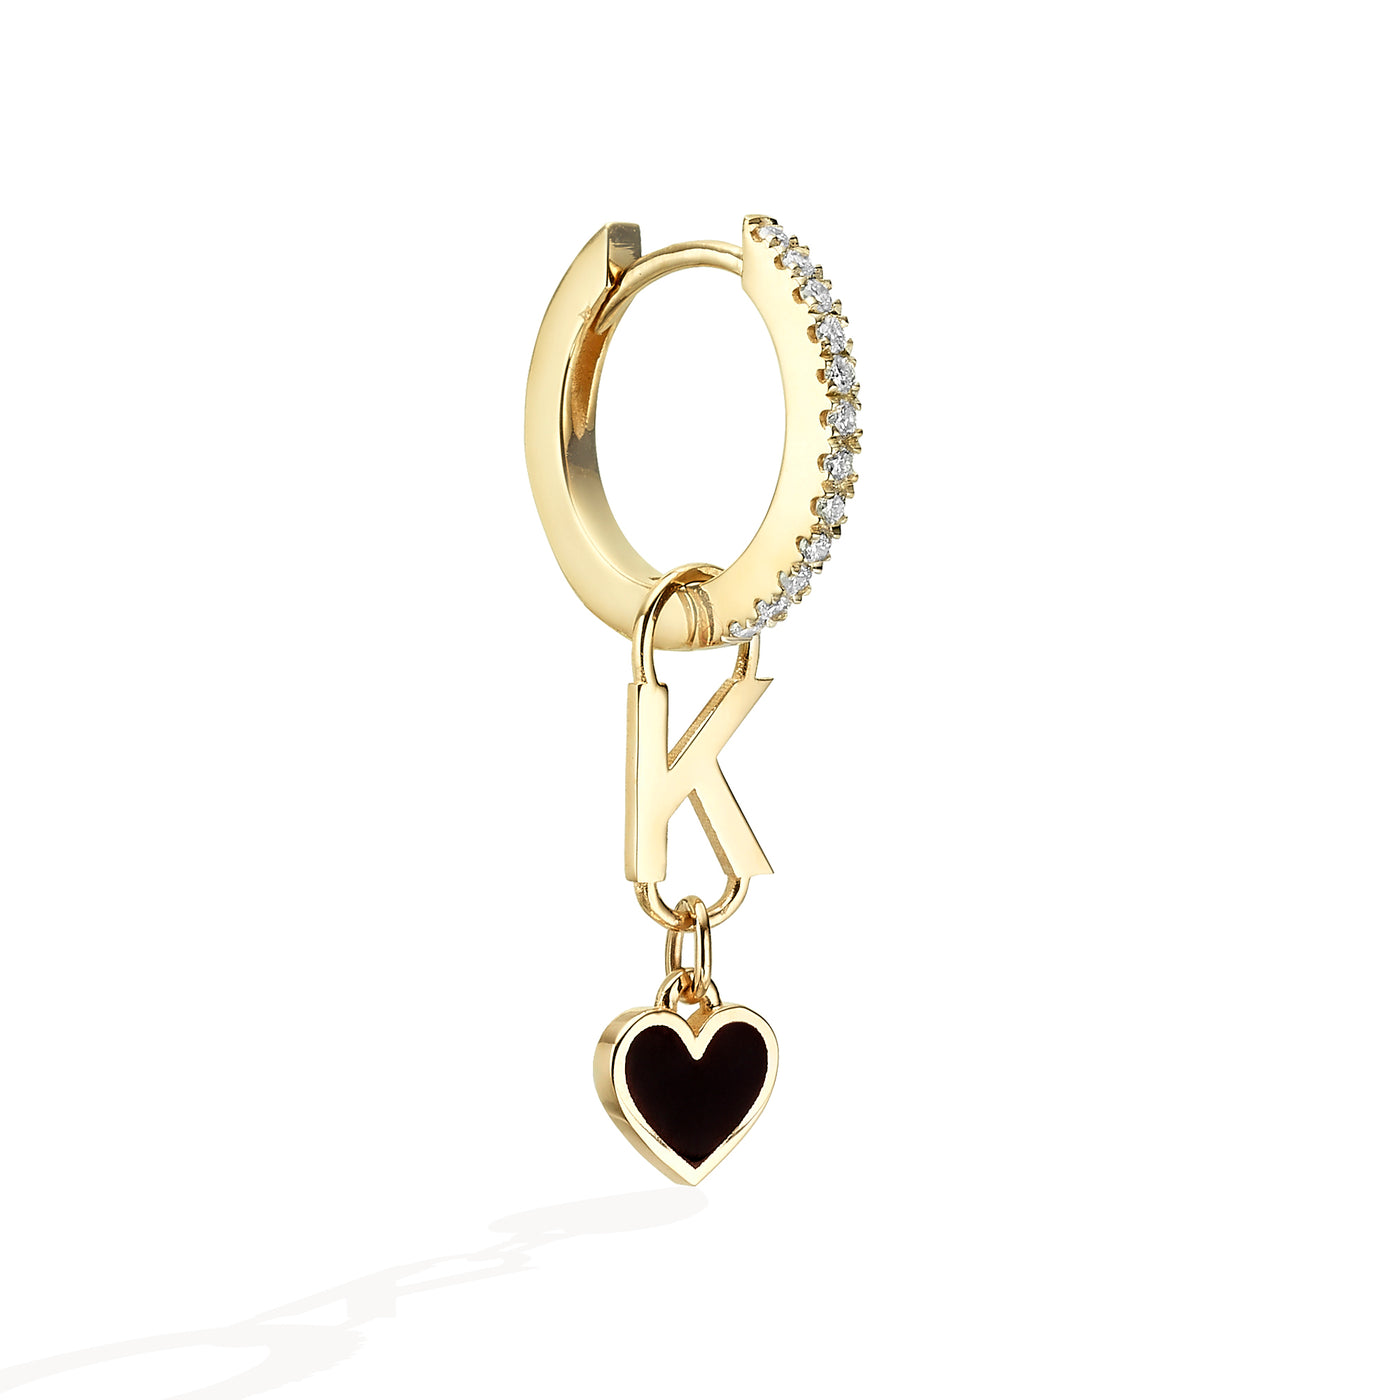 Single personalized letter hearts earring - Black